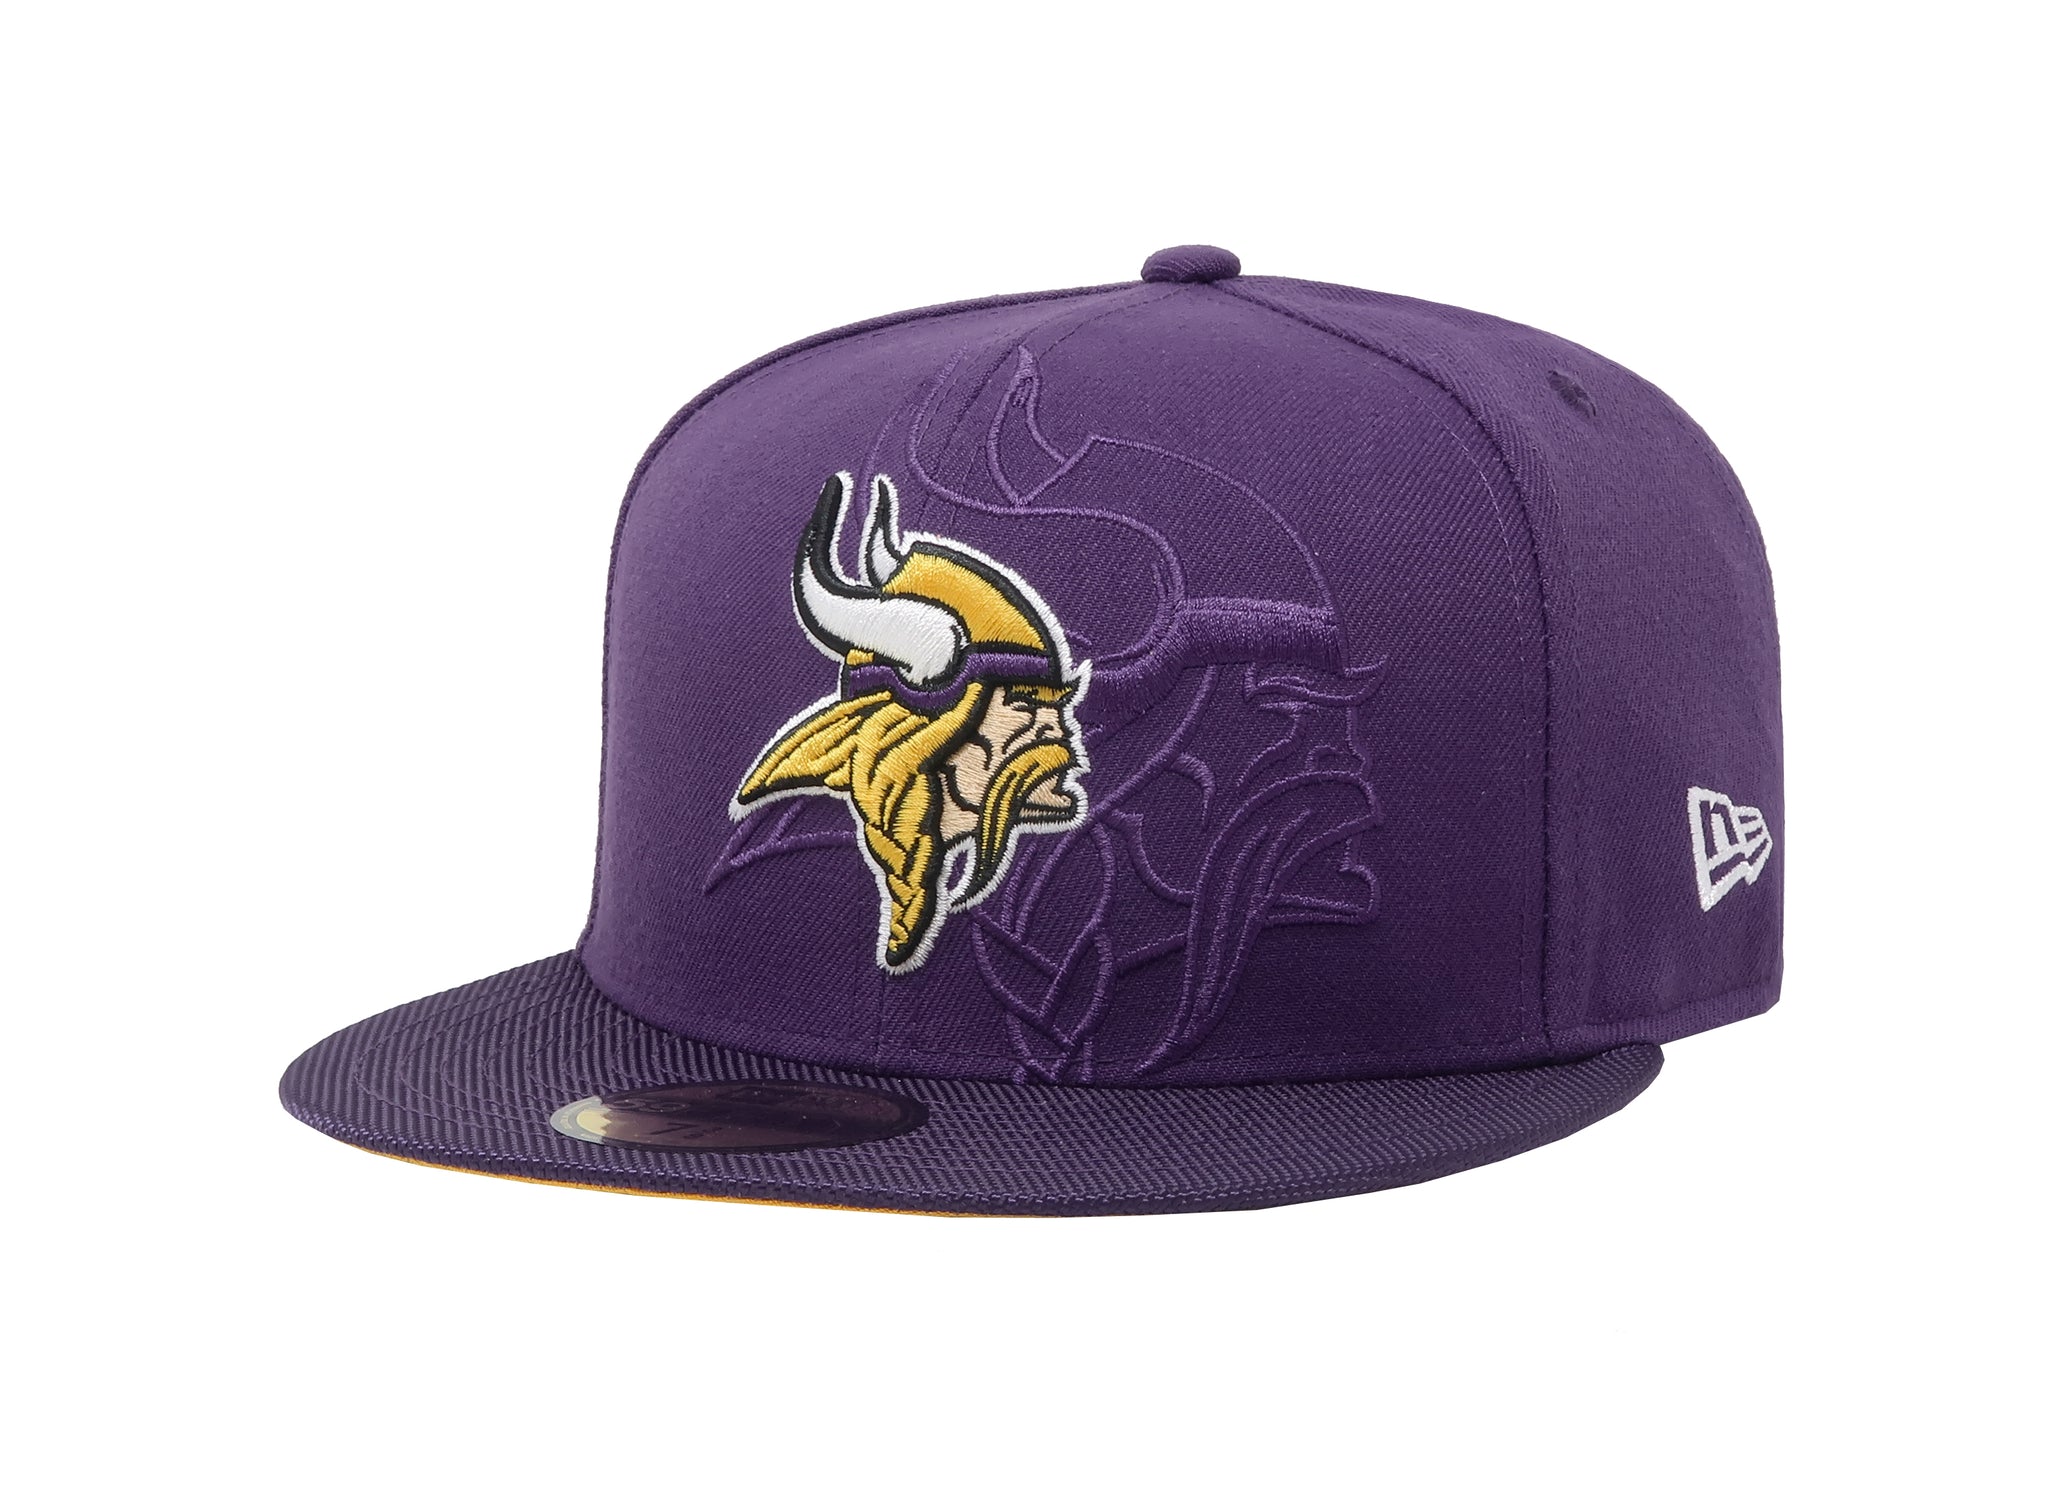 New Era 59Fifty Men's Team Minnesota Vikings Purple Fitted Cap